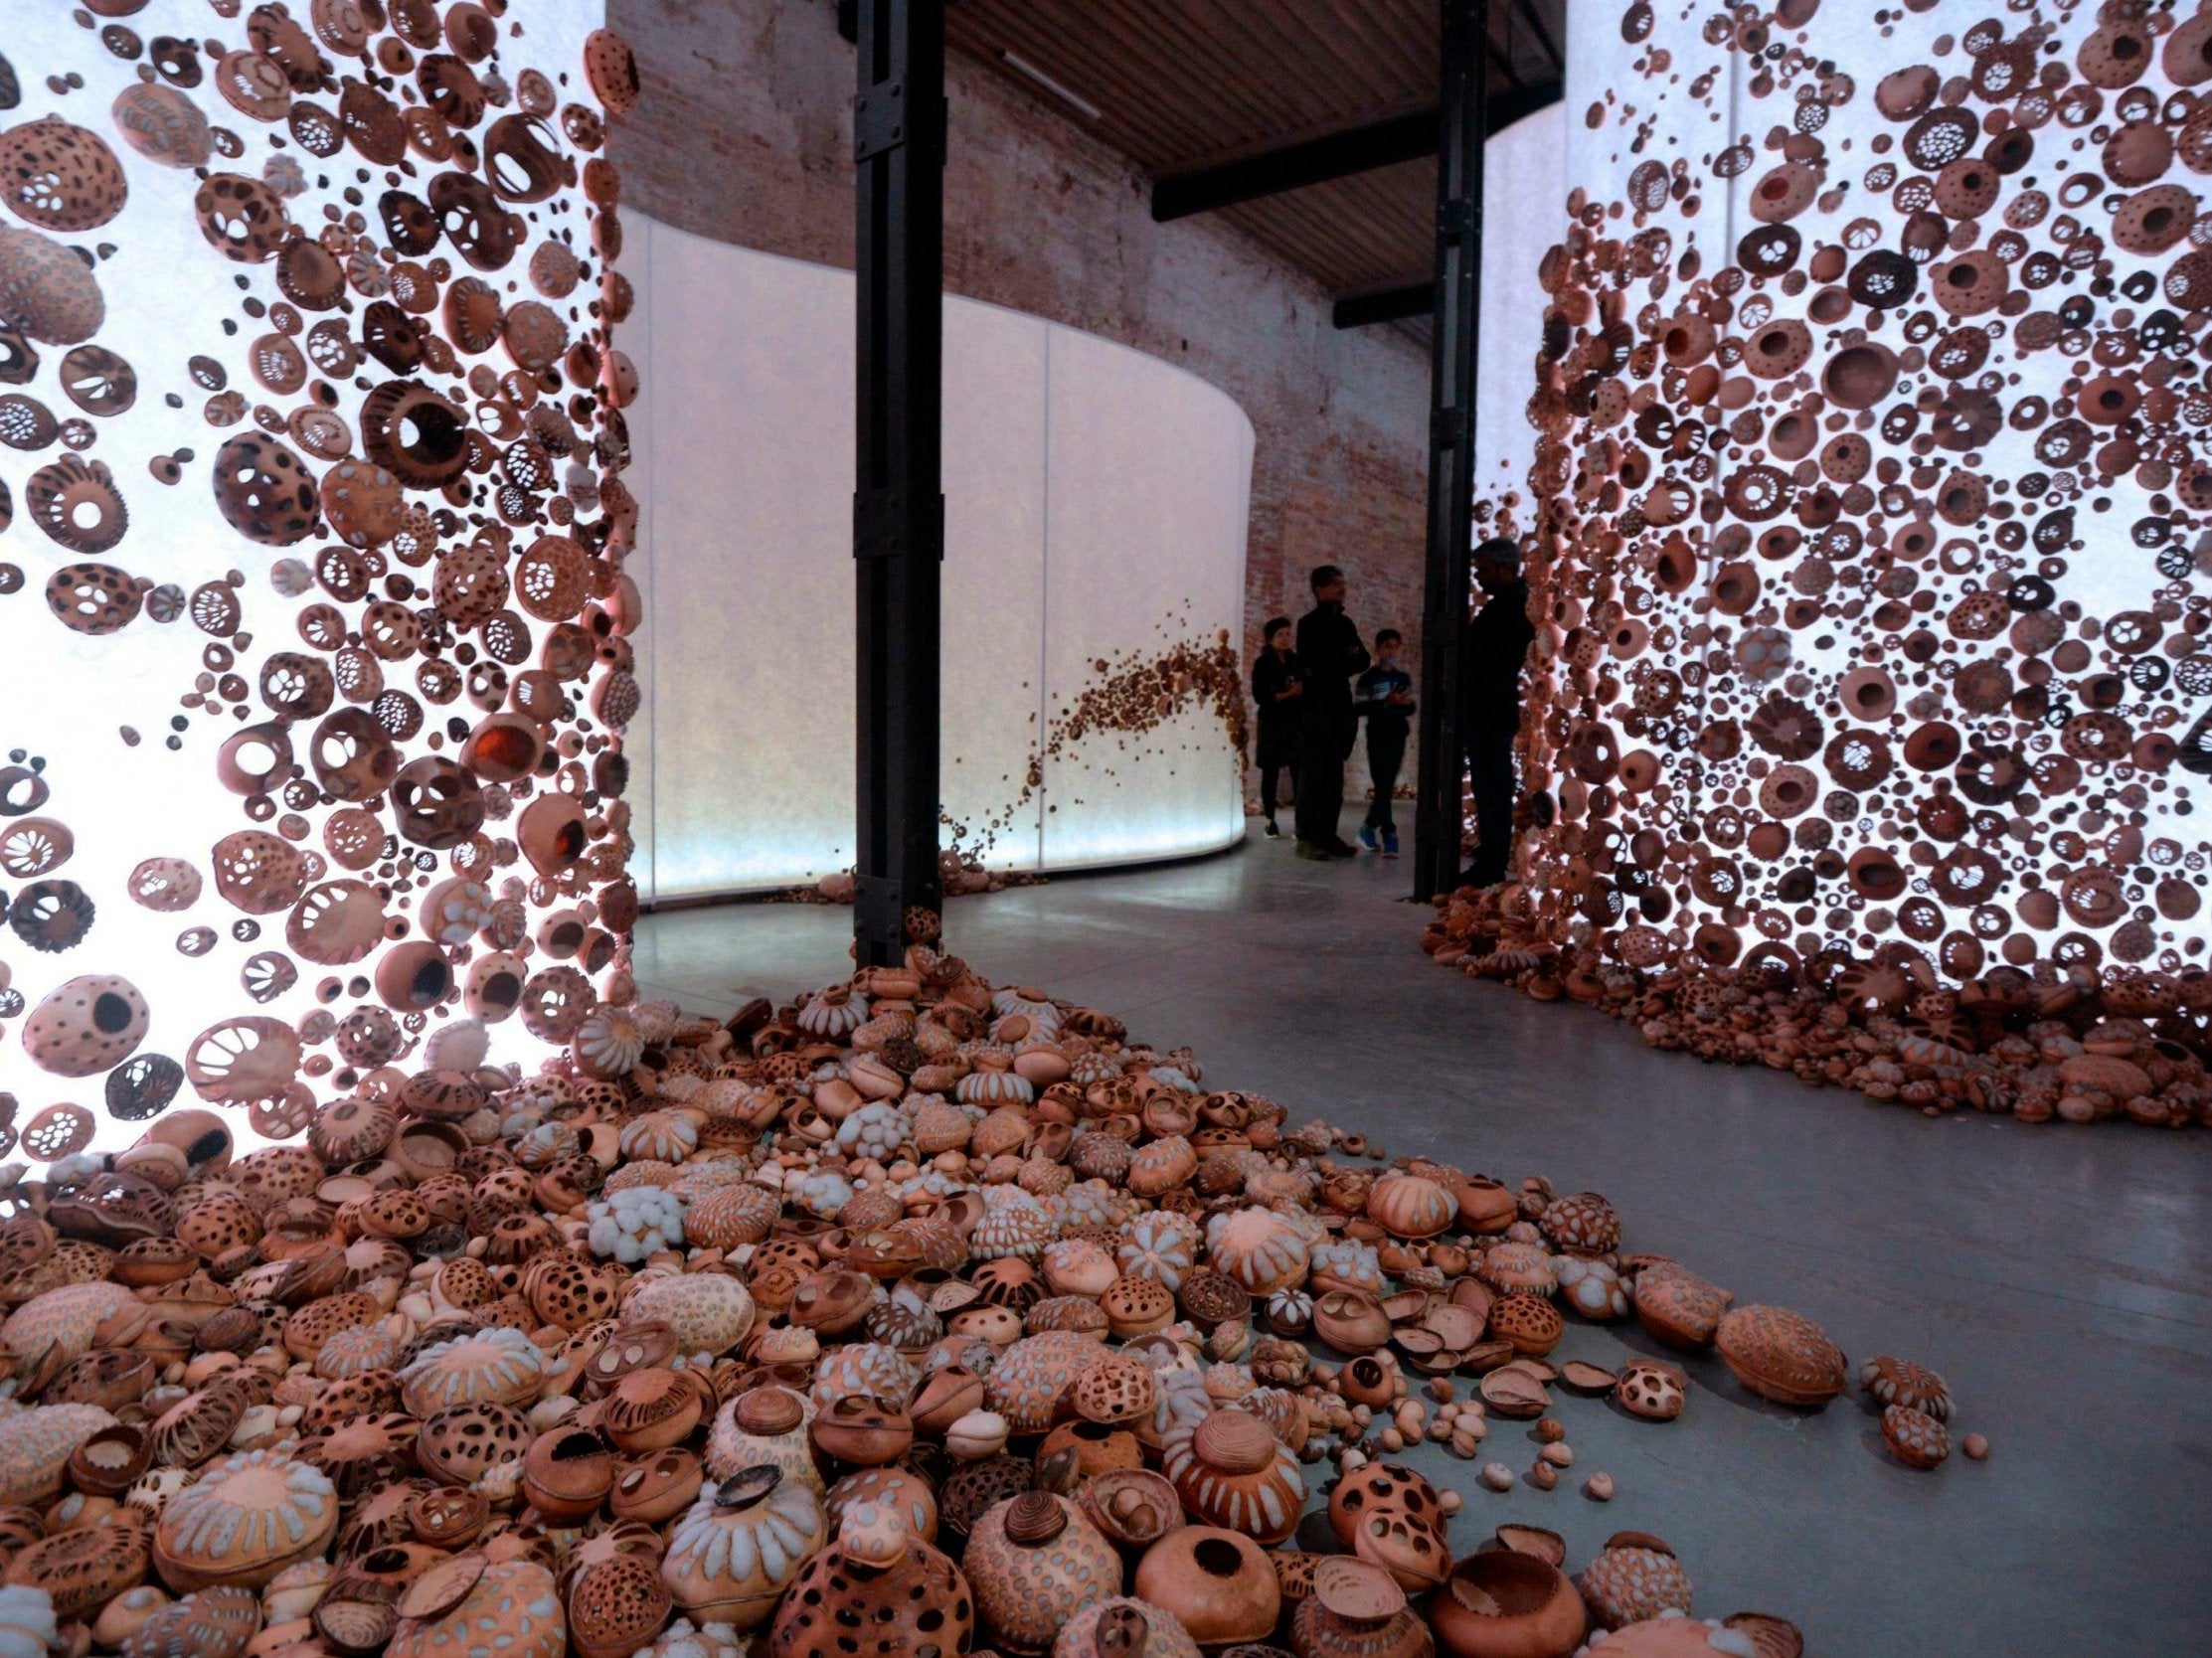 ‘After Illusion’ by Zahran Al Ghamdi is shown at the Saudi Arabia pavilion